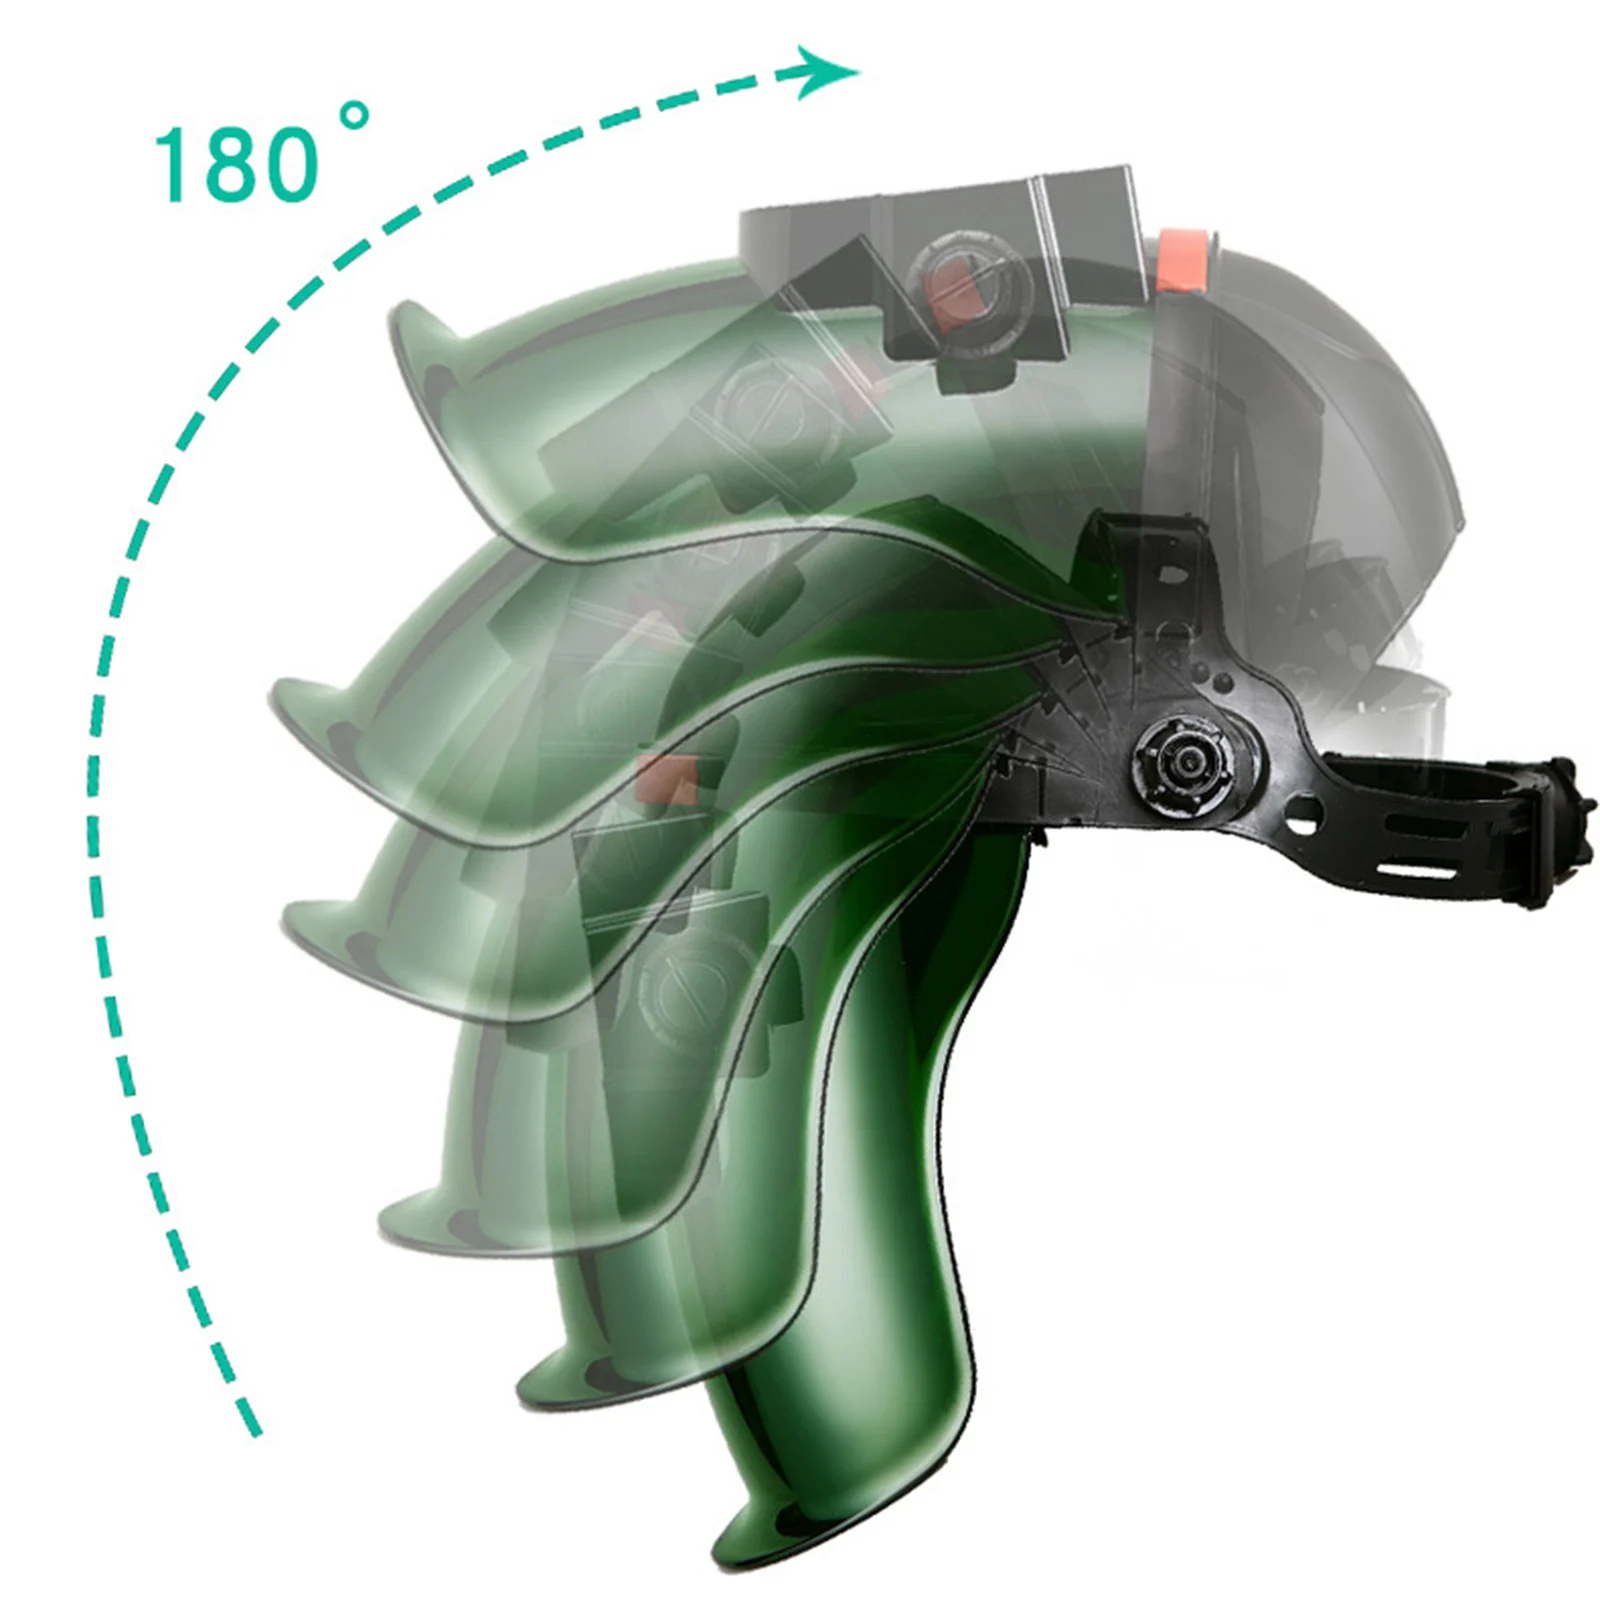 Solar Fully Auto Darkening Adjustable Range Flip Electric Welding Protective Mask Helmet Lens for  Machine